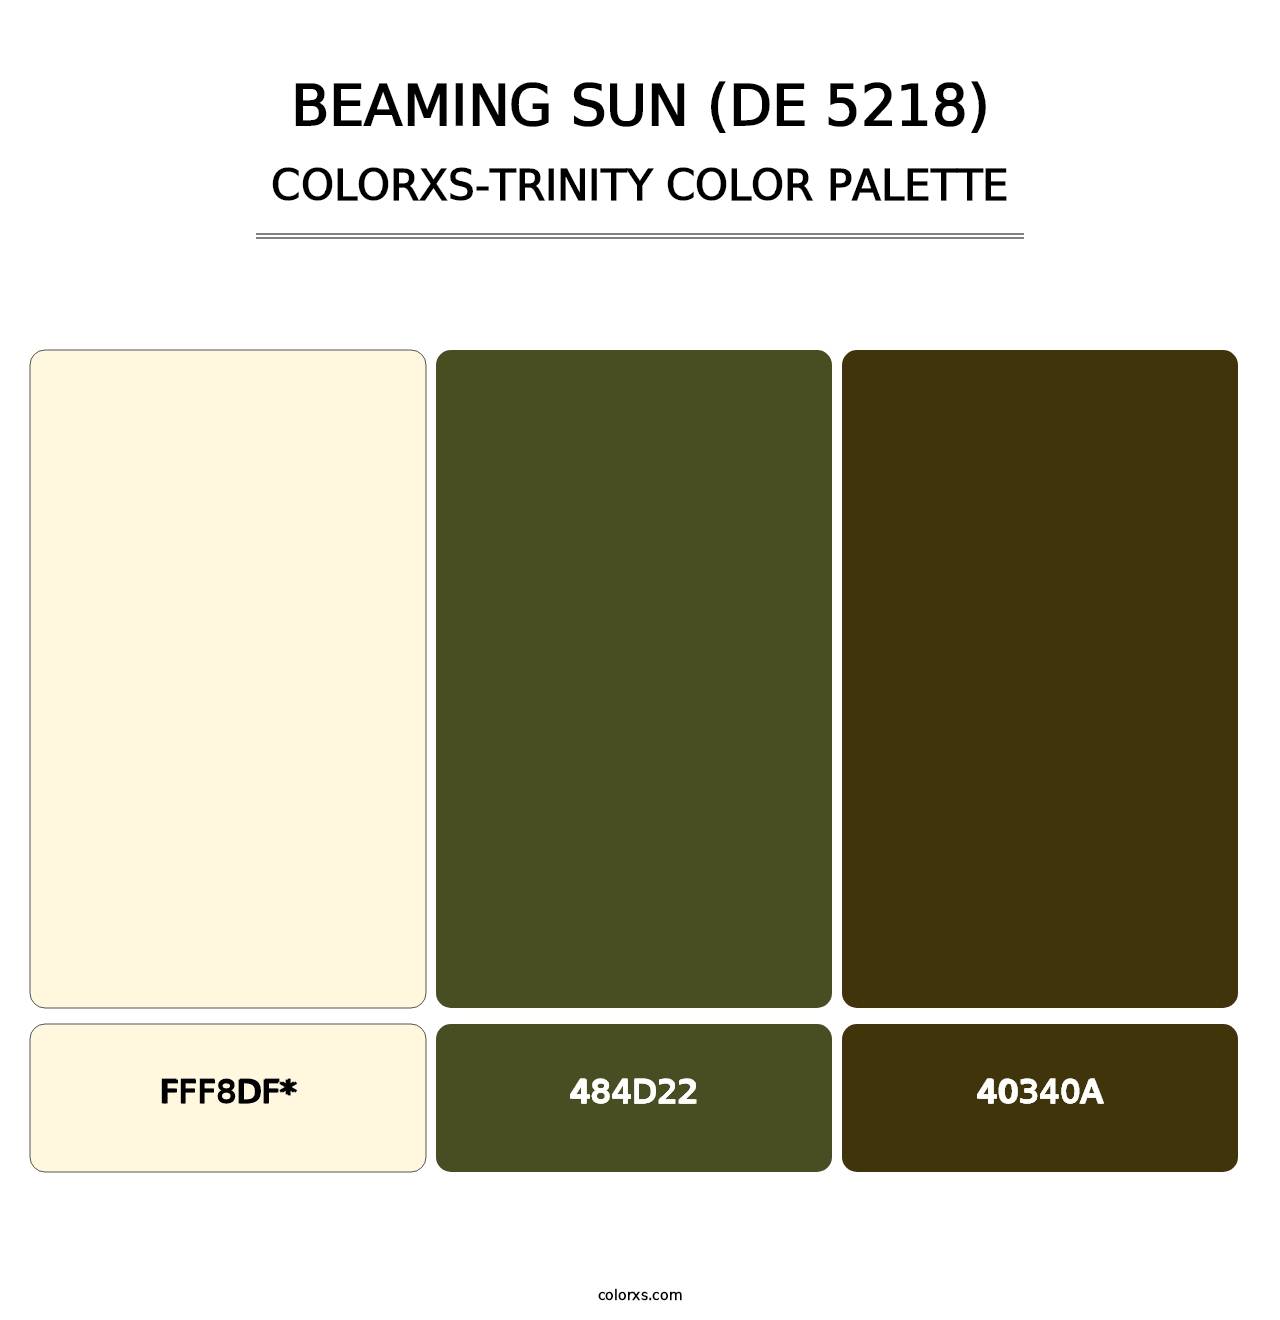 Beaming Sun (DE 5218) - Colorxs Trinity Palette